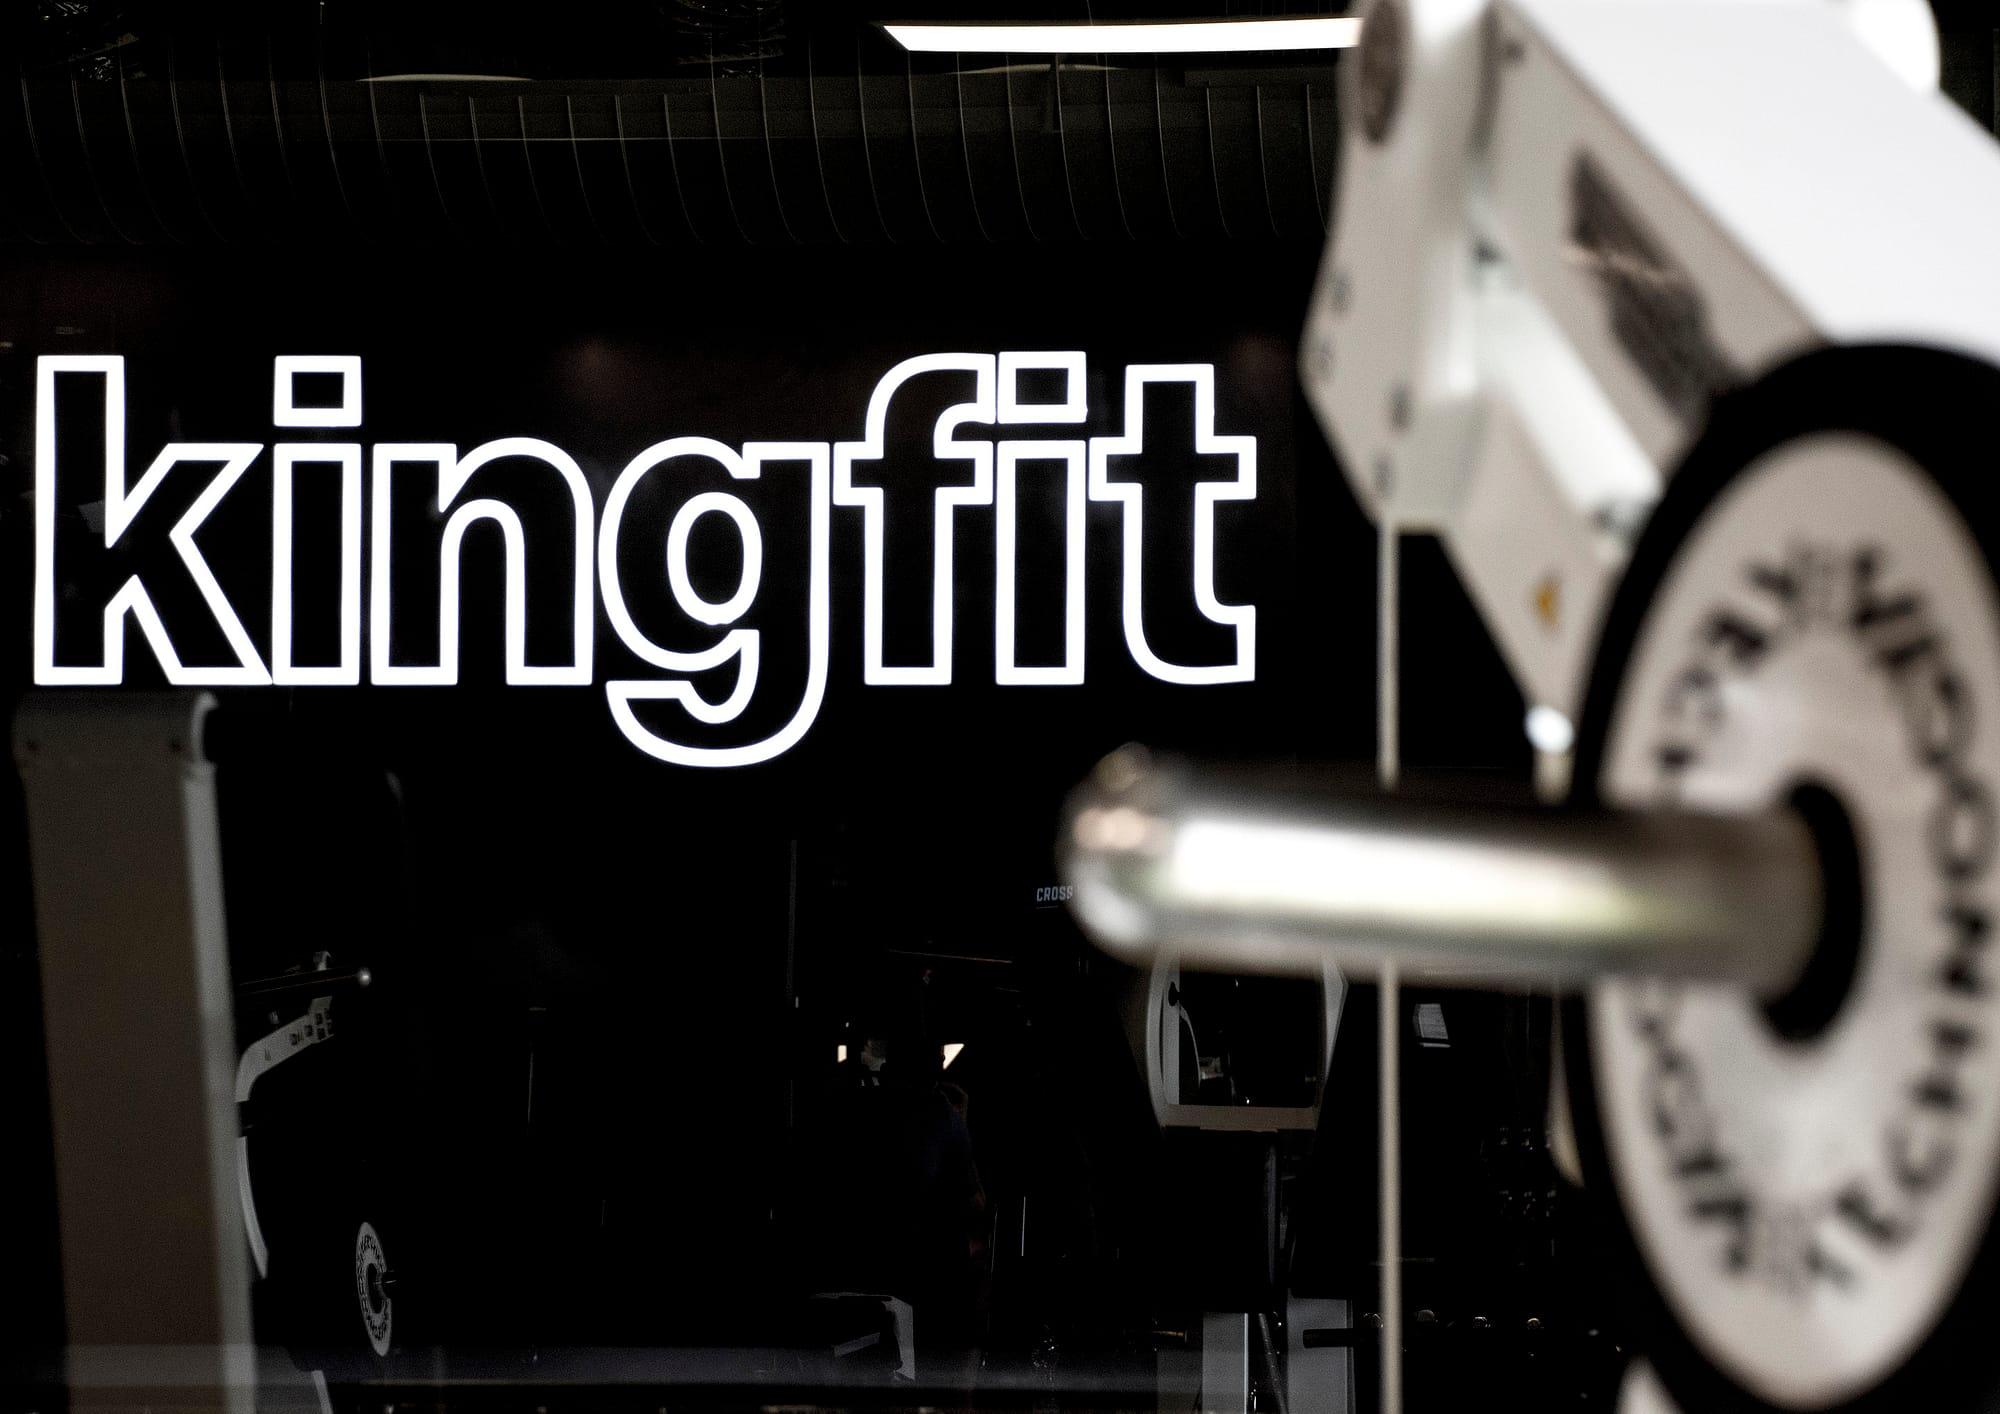 Kingfit, dettaglio marchio illuminato